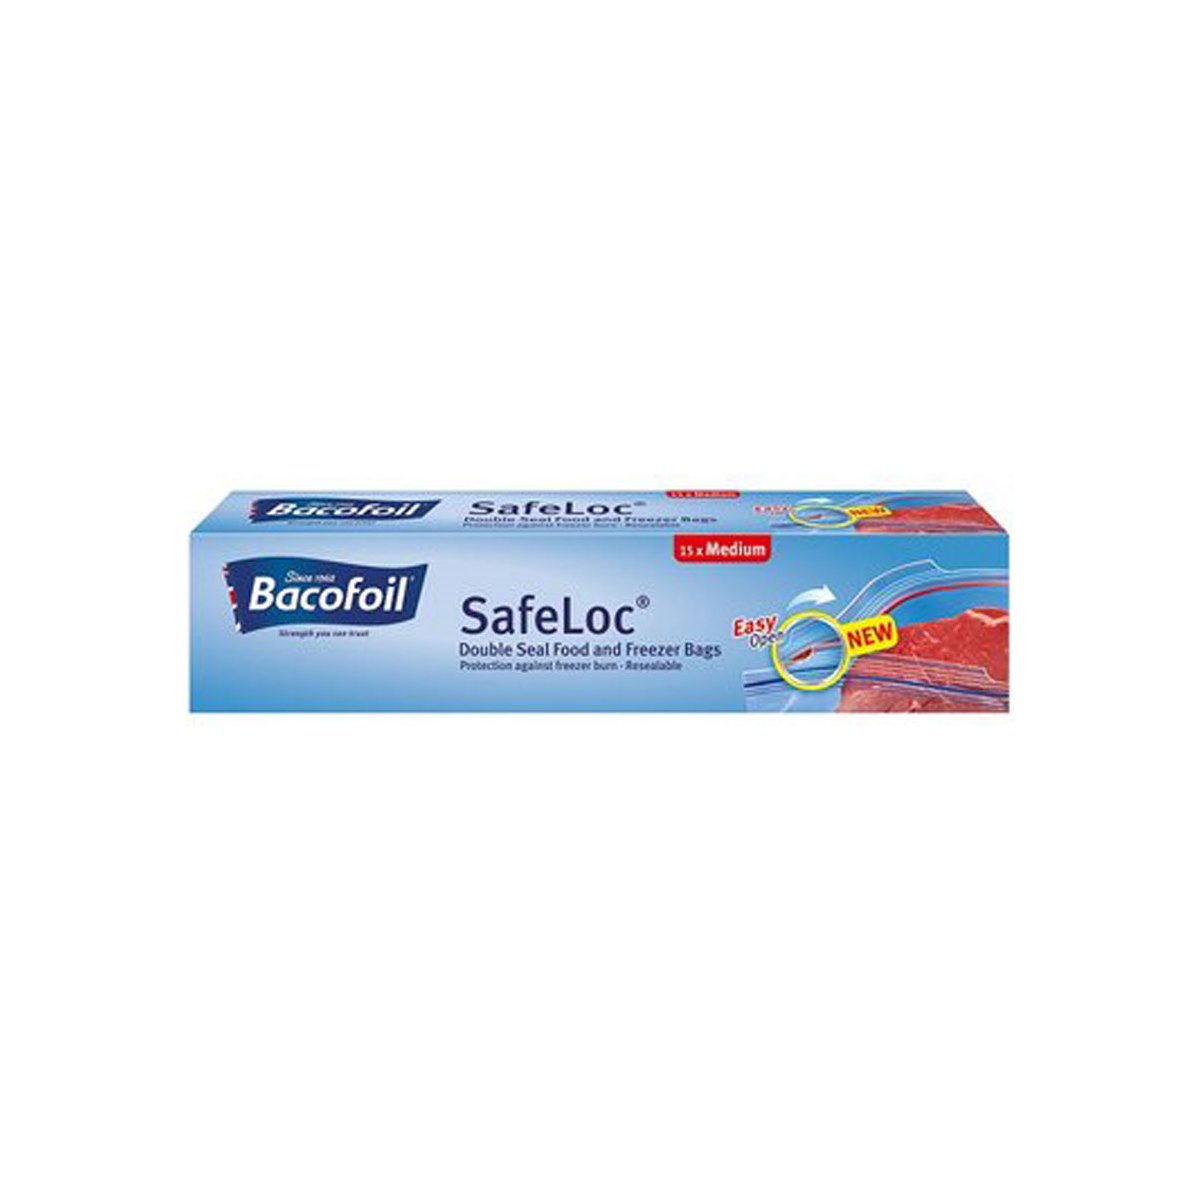 BacoFoil Safeloc Food and Freezer Bags 15 Medium